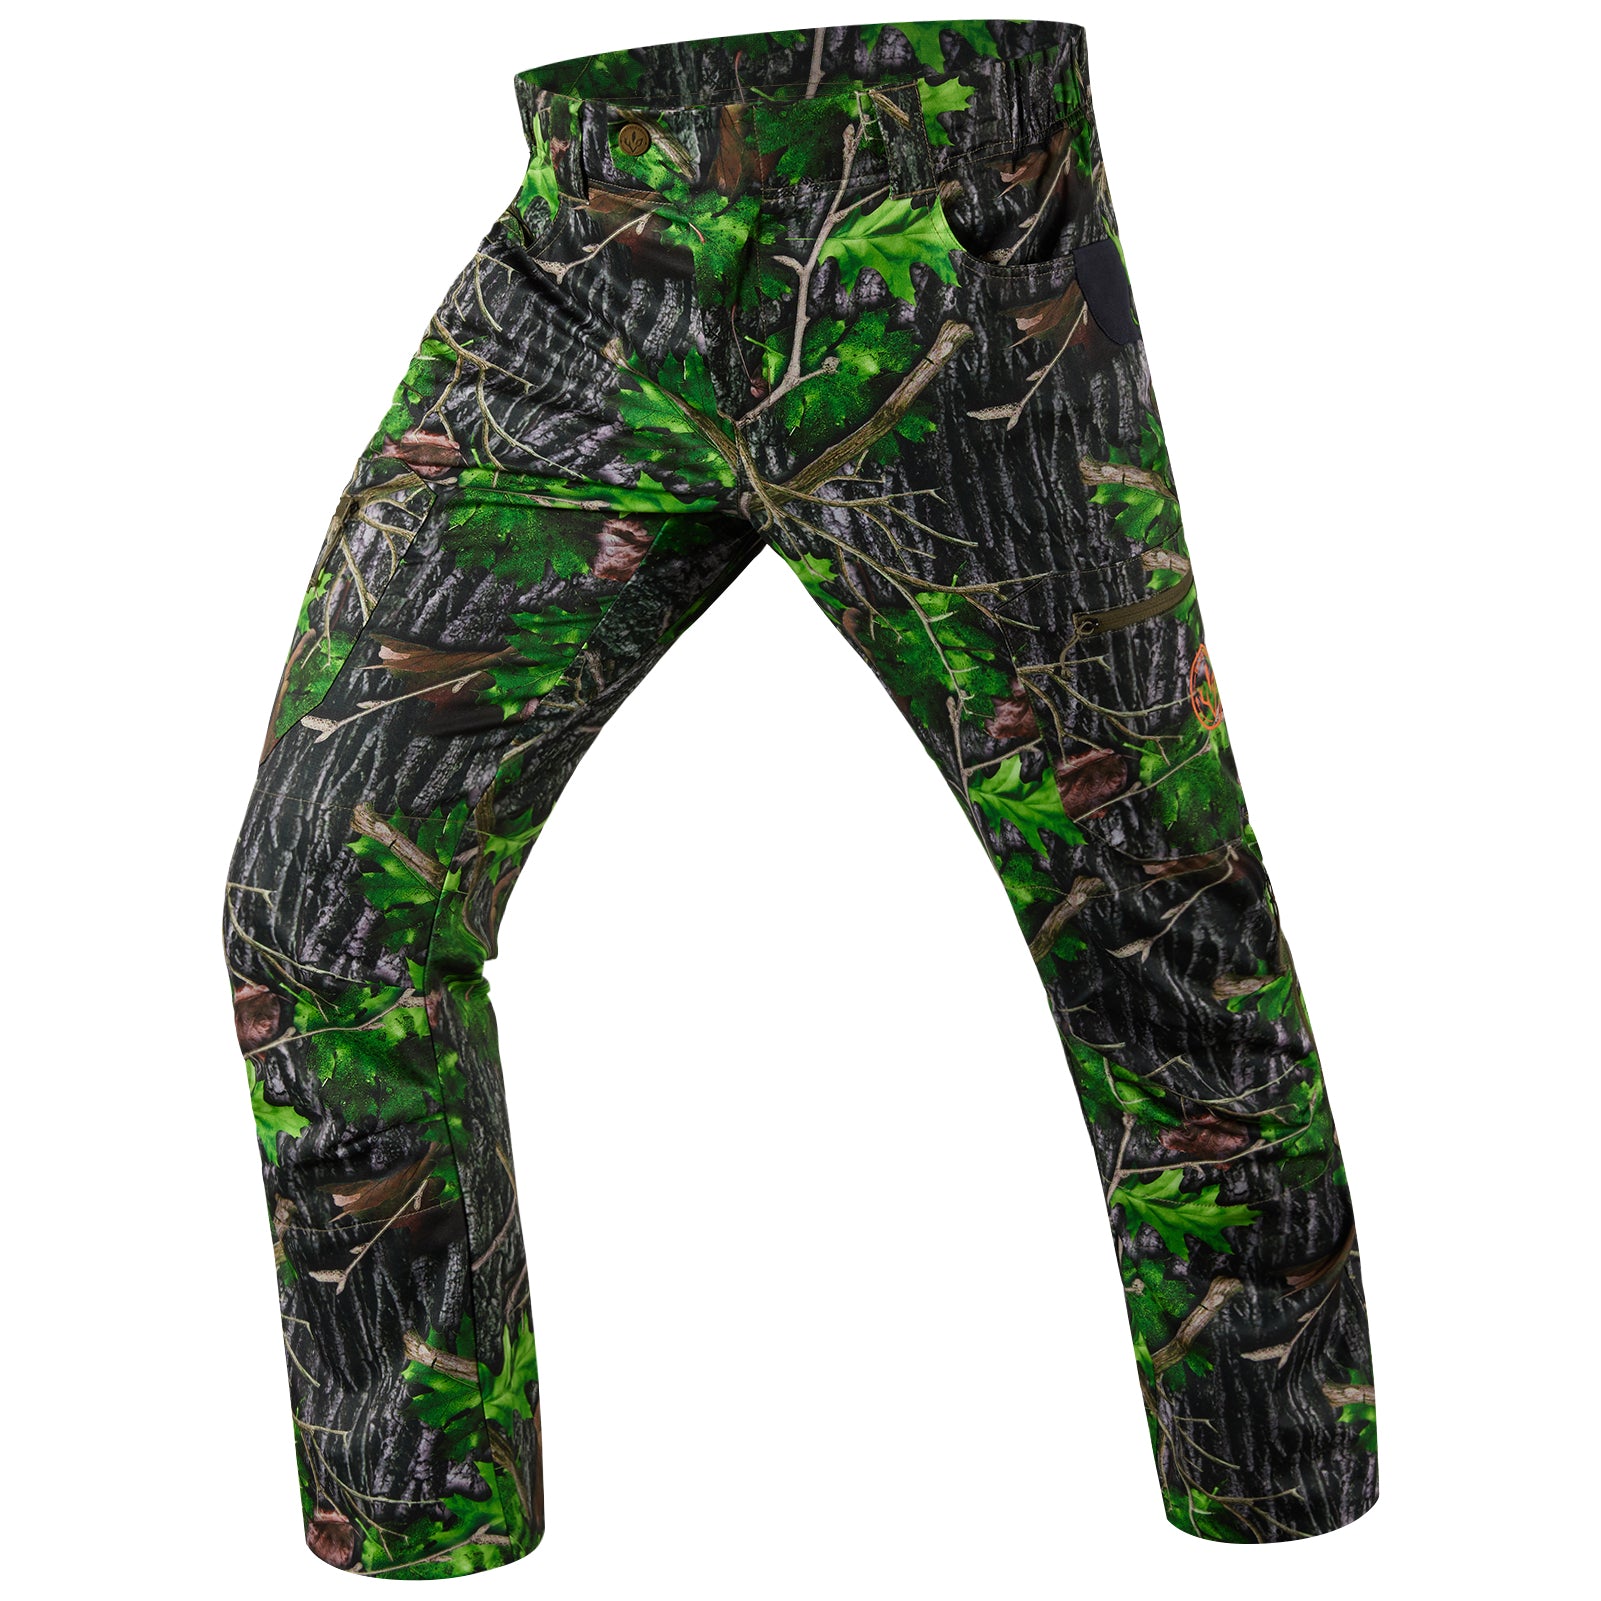 Bassdash Men's Tracker Lightweight Hunting Pants for Early Season, Green Leaf / 38W x 32L